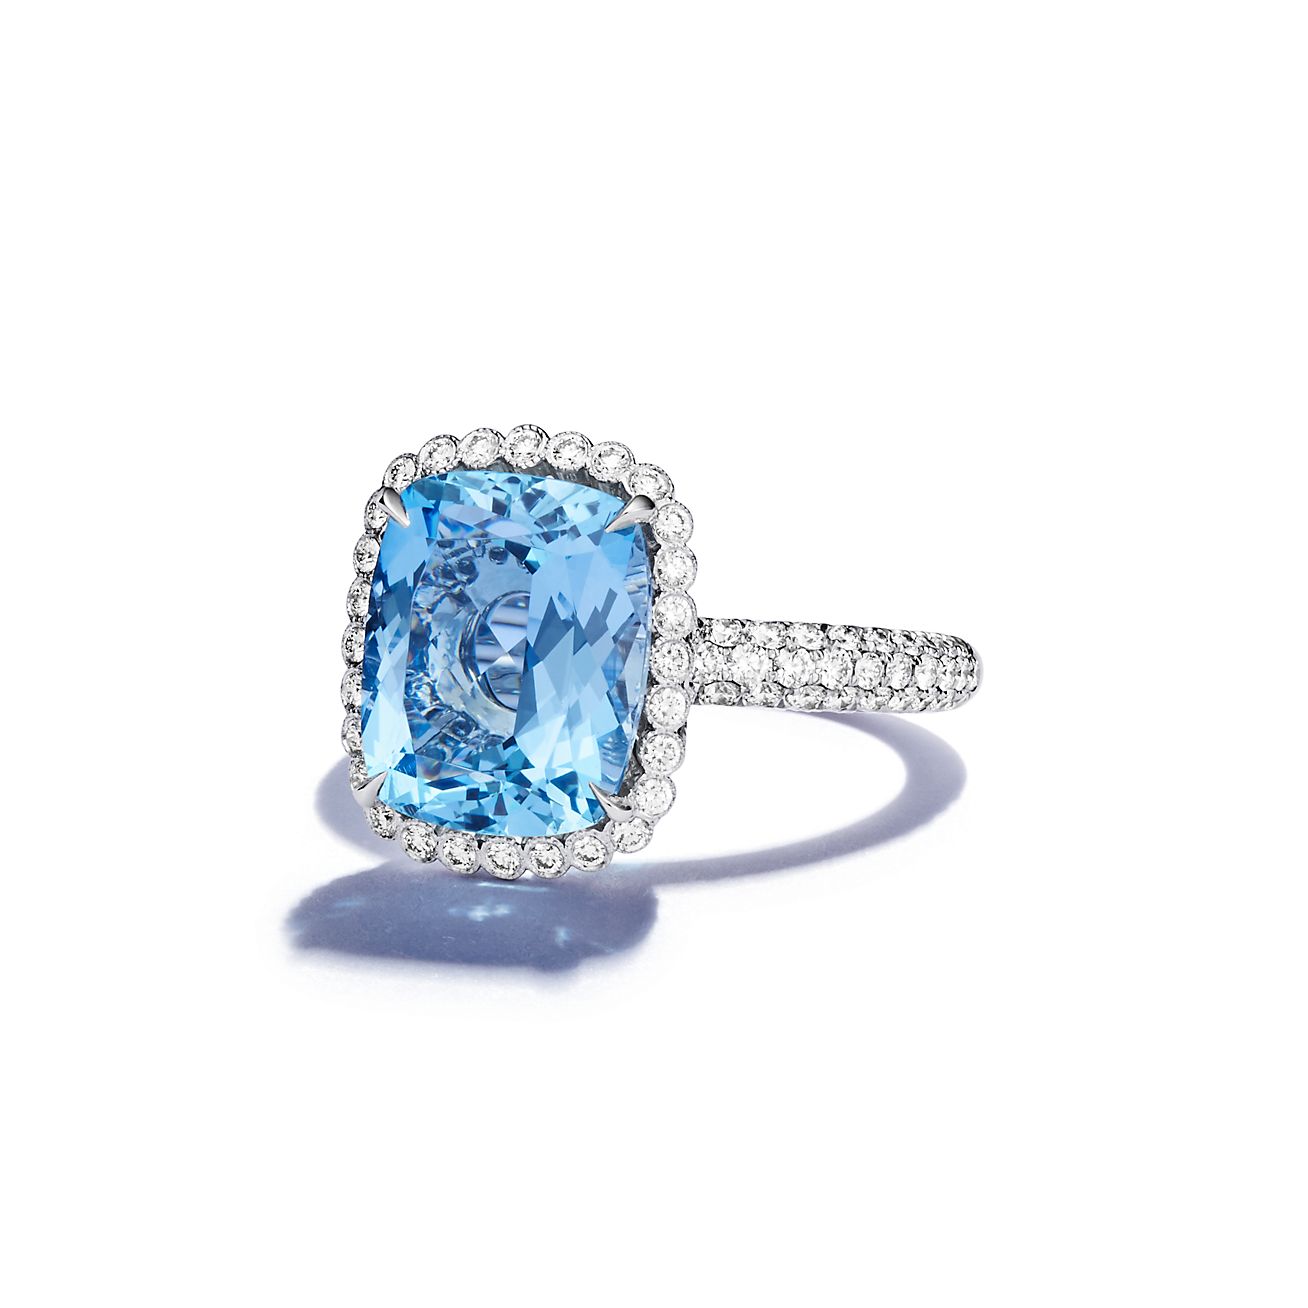 Stunning Gemstone Ring - Fashion Jewelry